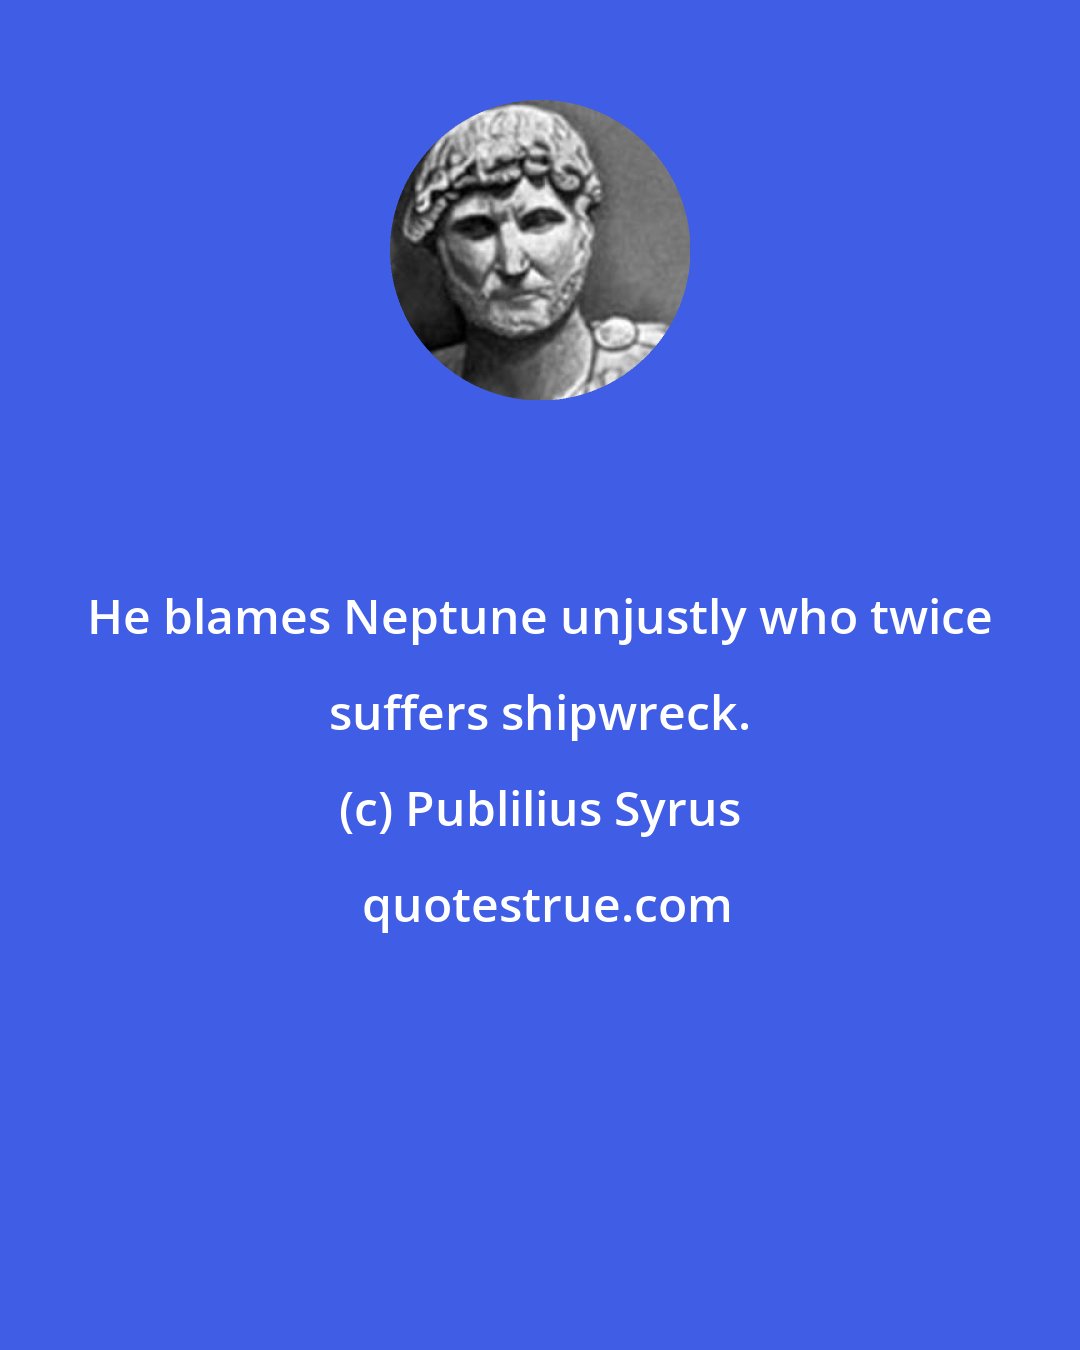 Publilius Syrus: He blames Neptune unjustly who twice suffers shipwreck.